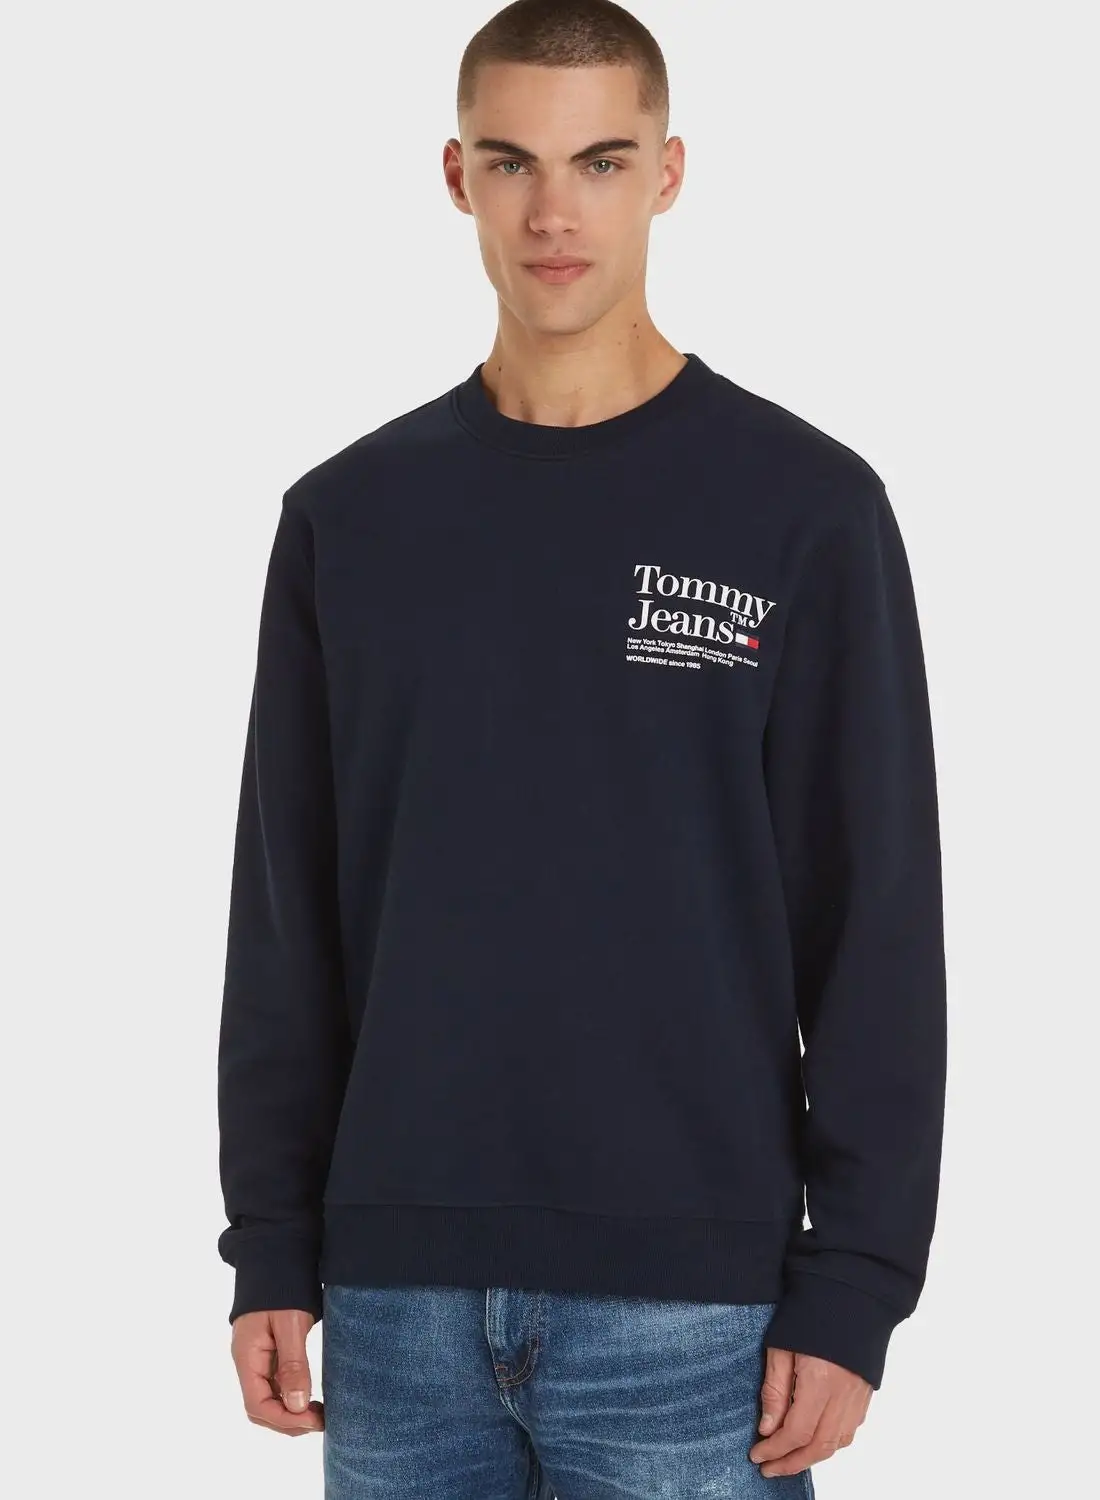 TOMMY JEANS Text Print Modern Sweatshirt